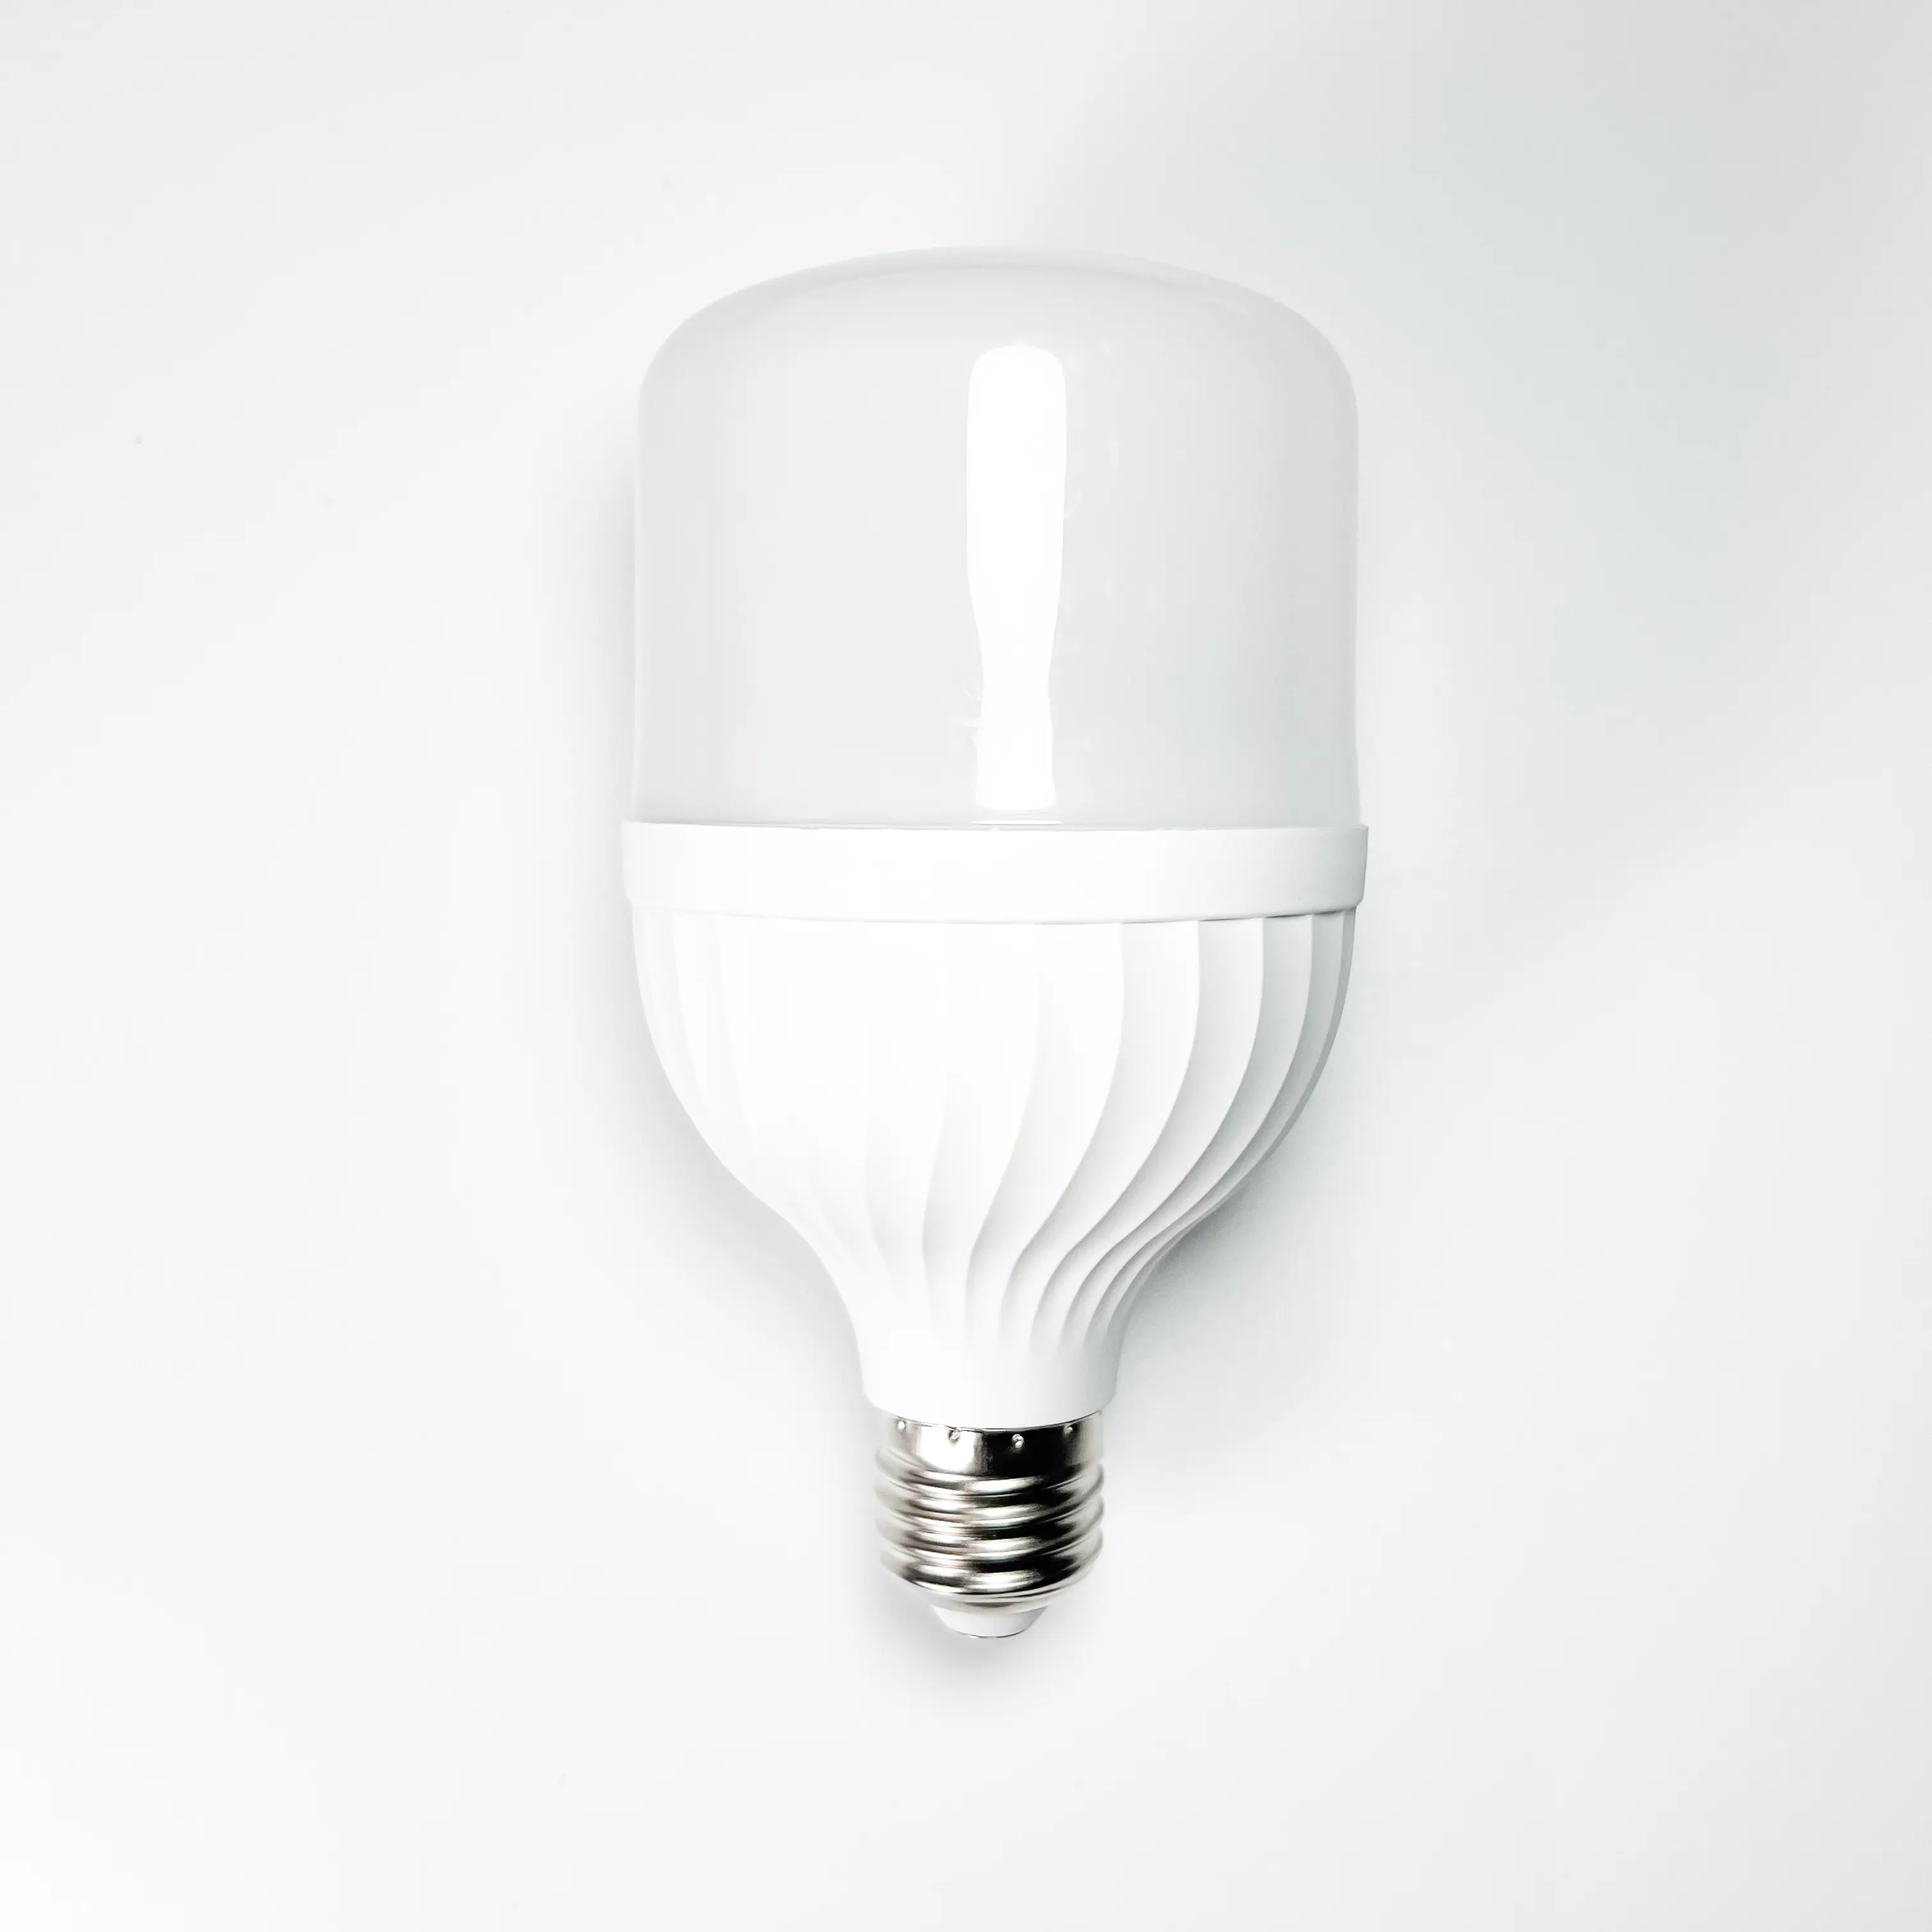 Nieuw Ontwerp T Vorm 10W Led Gloeilamp/Energiebesparende Lamp/Energiebesparend Licht Met Hoge Helderheid Home Gloeilamp